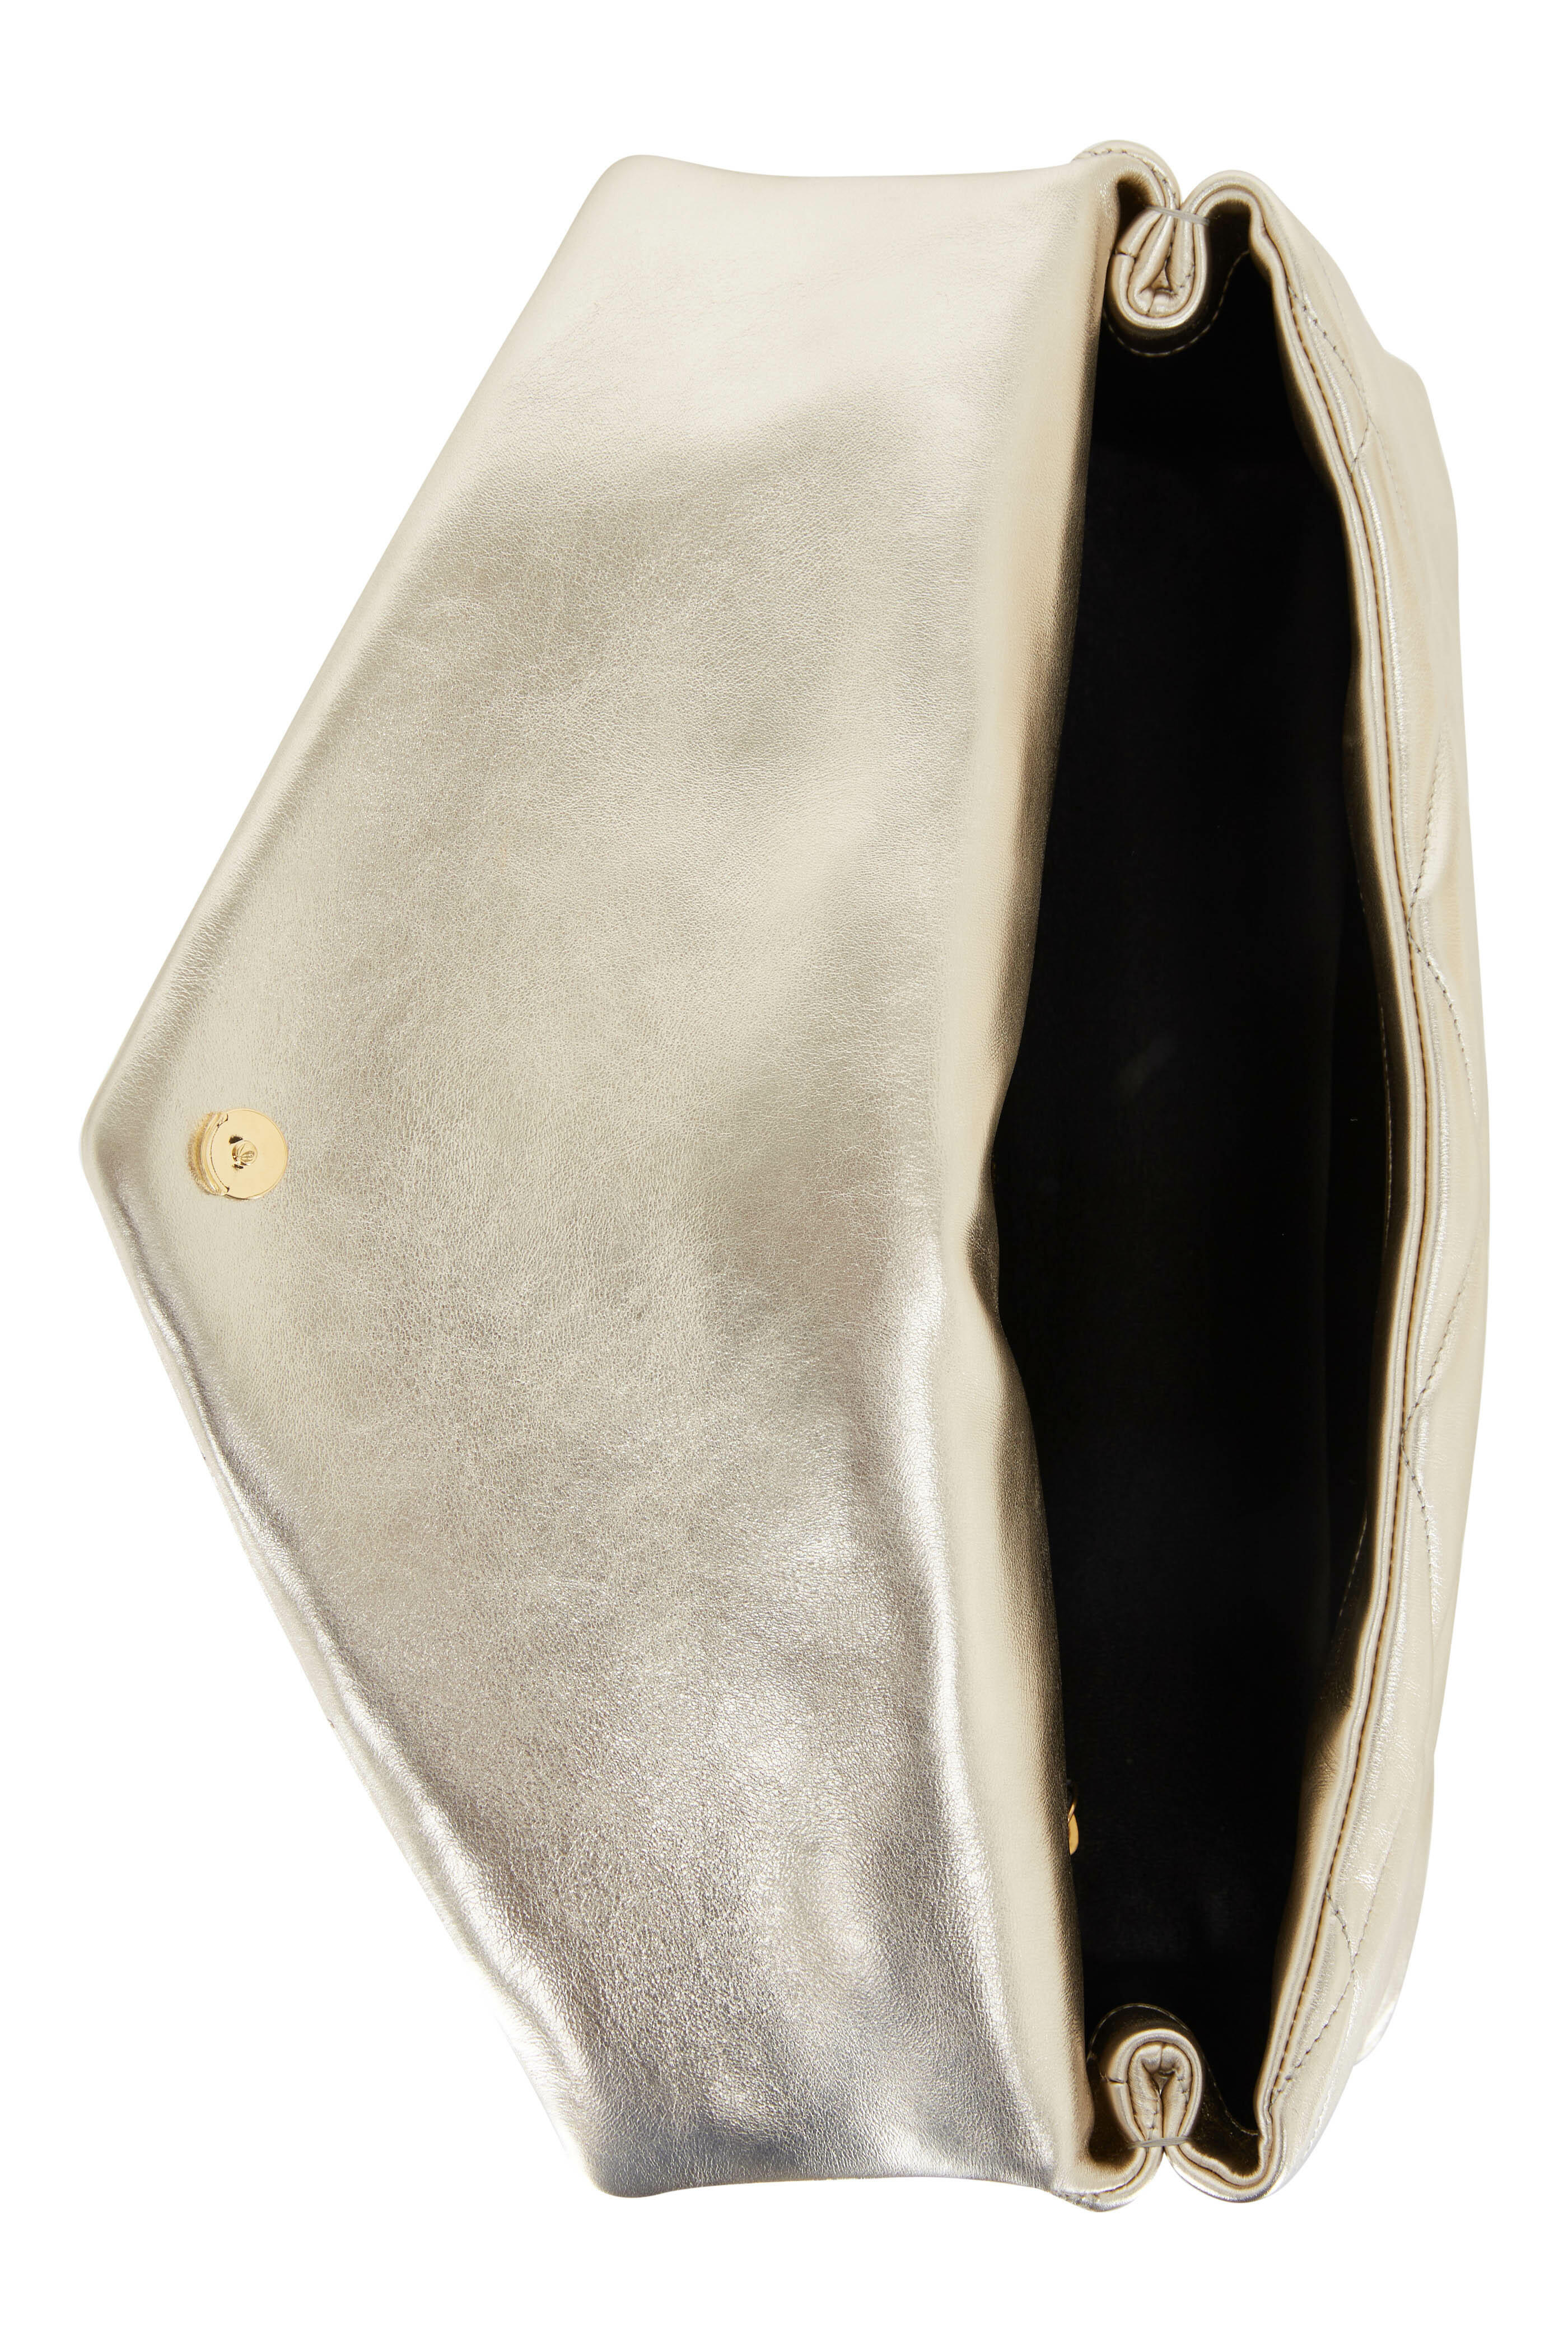 Saint Laurent - Sade Pale Gold Leather Puffer Clutch